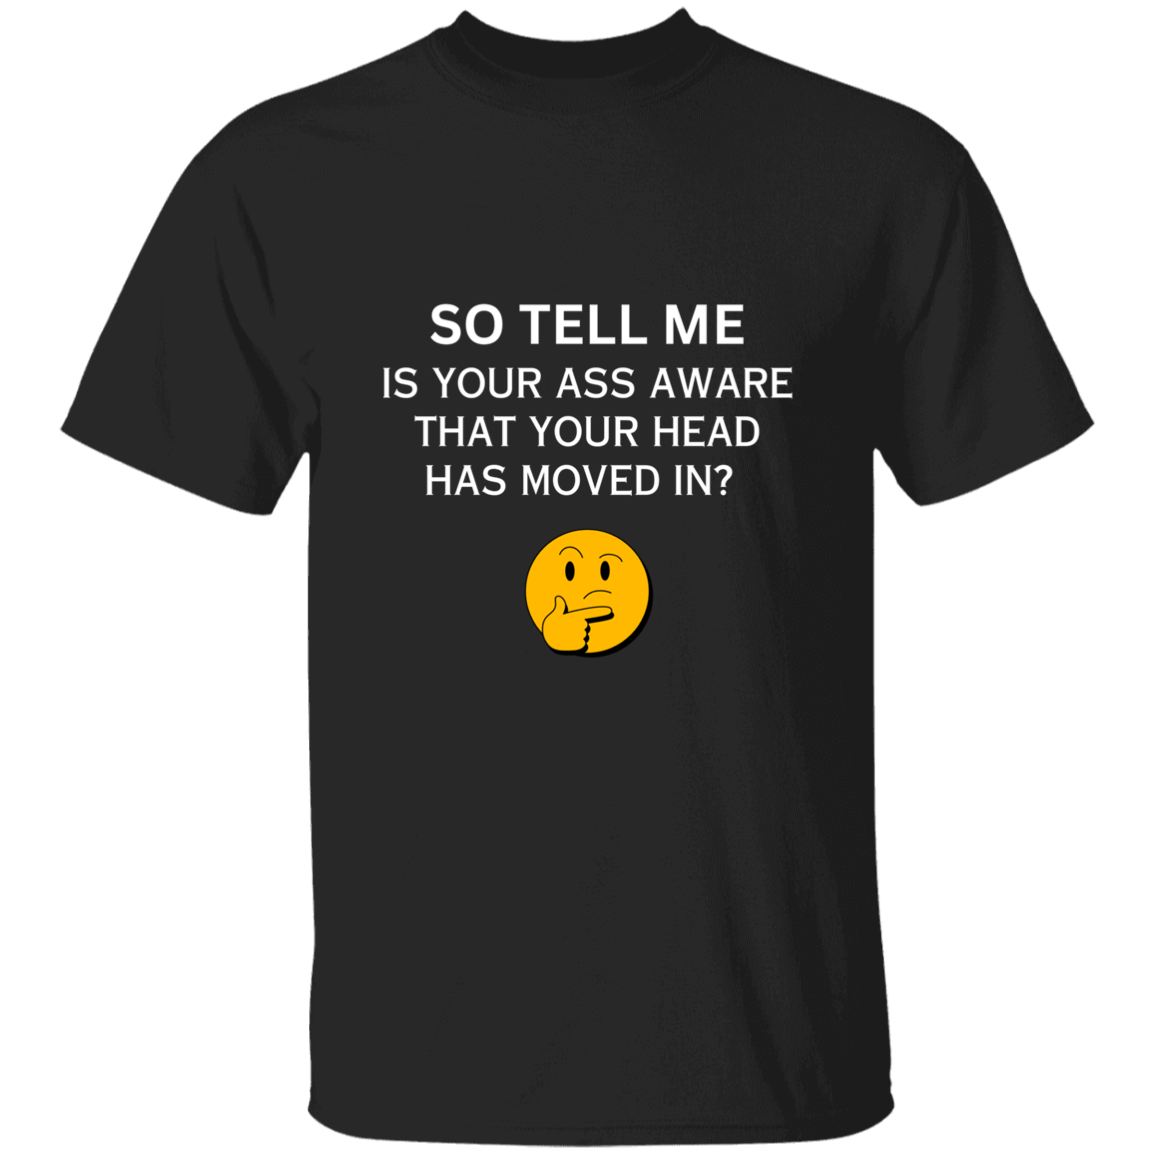 So Tell Me T-Shirt, Funny Quote Shirts, Feminist Shirt, Novelty T-shirt, Sarcastic T-shirt